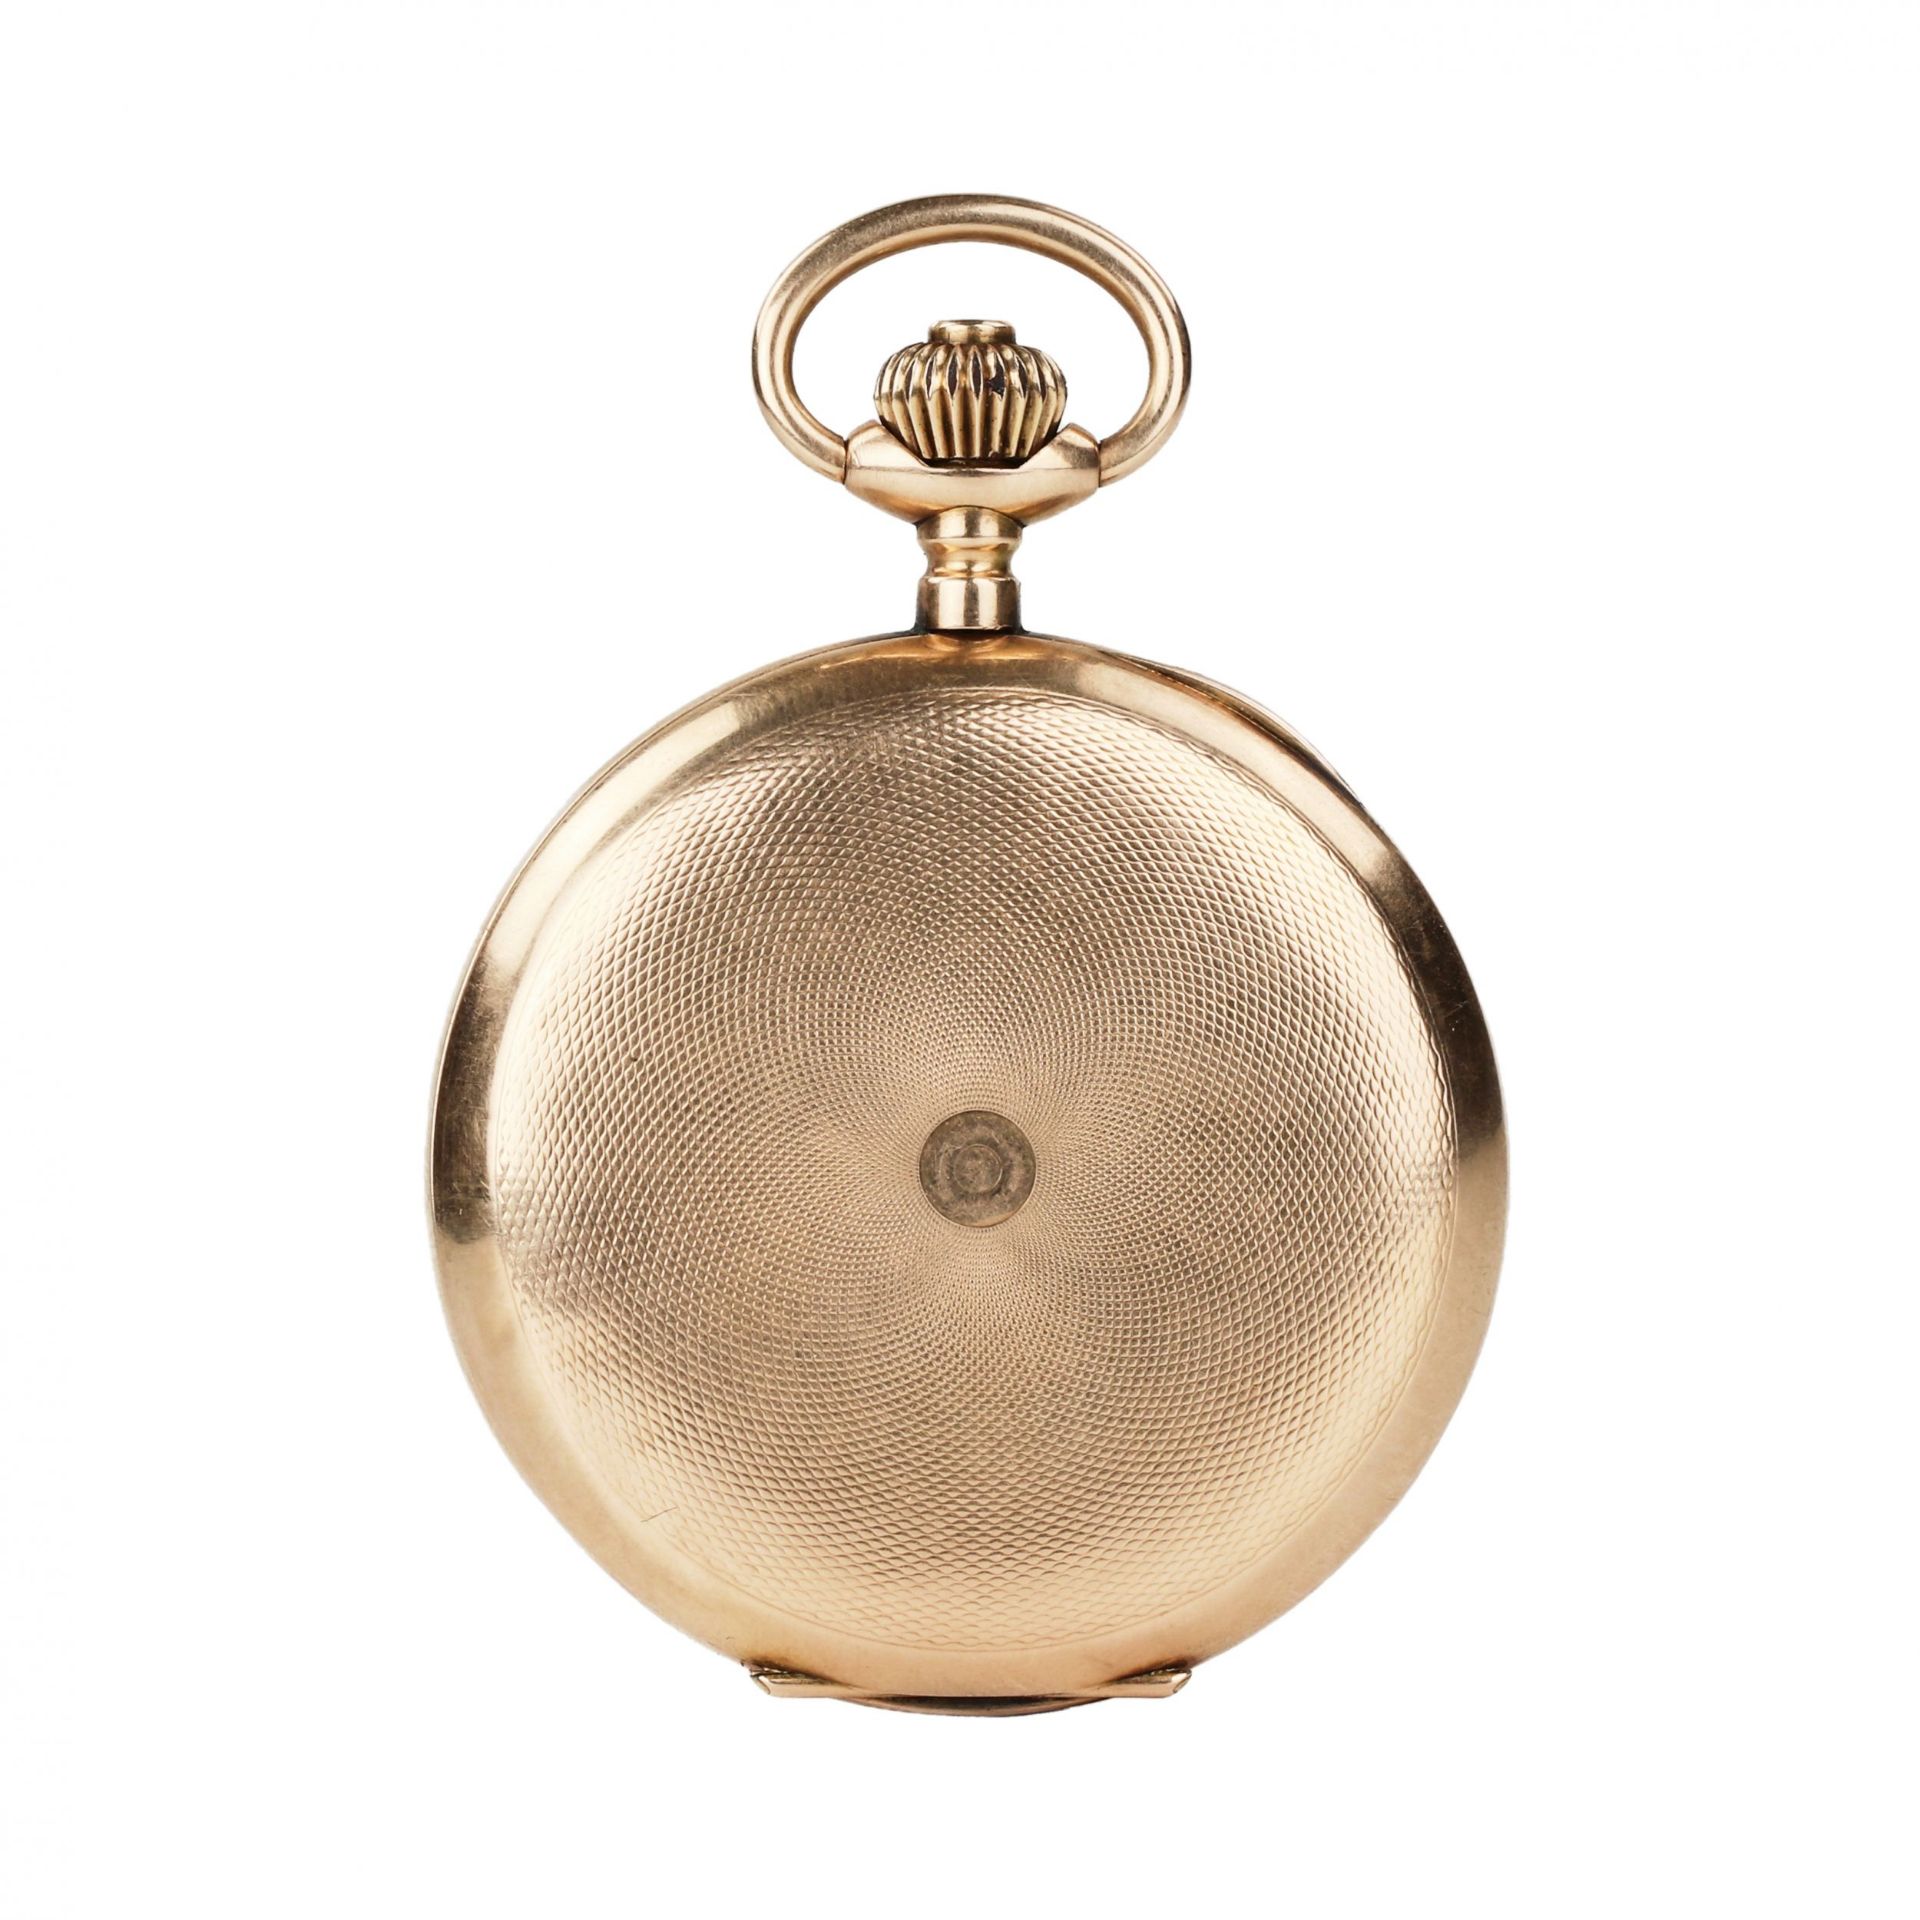 Moulinet gold pocket watch. - Image 3 of 9